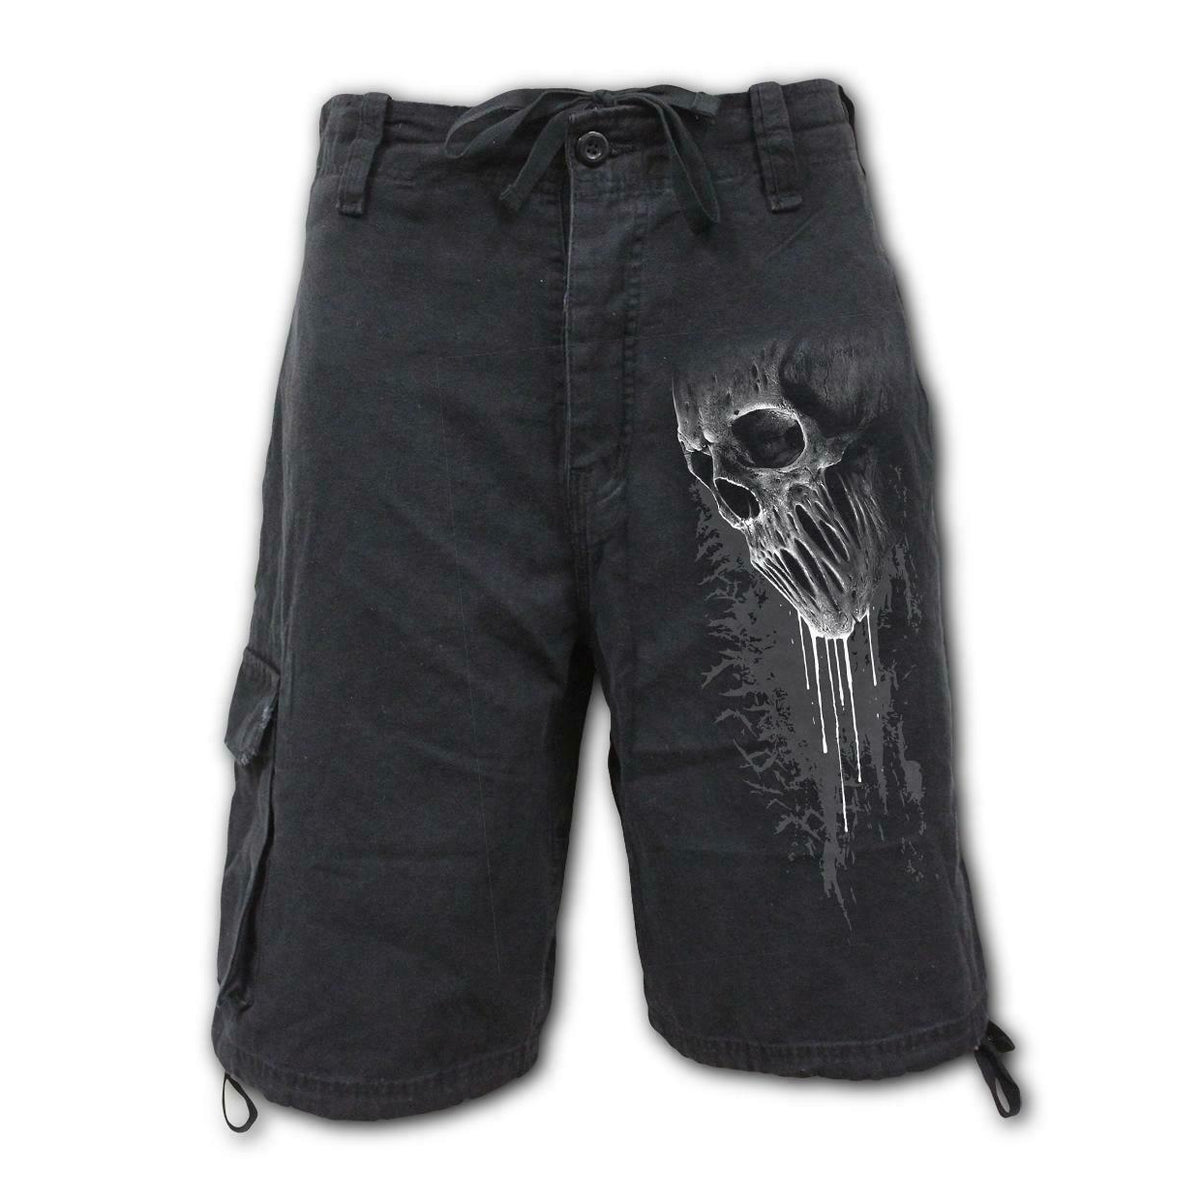 Bat Curse Mens Black Cargo Shorts-Mens Shorts &amp; Pants-Scarlett Dawn